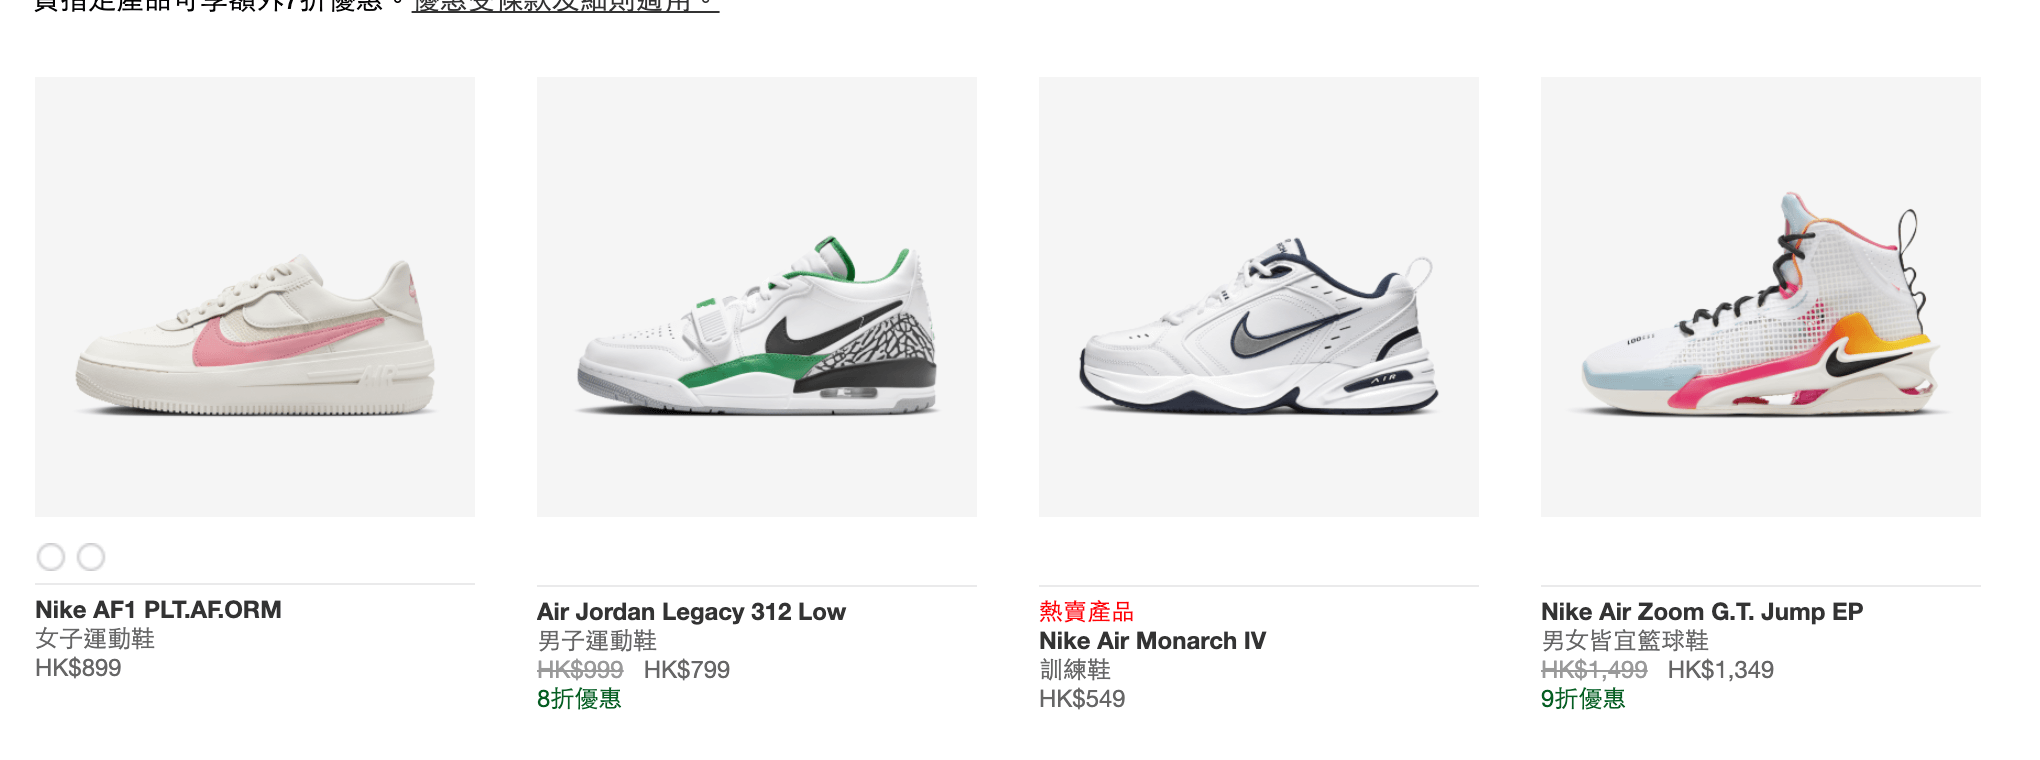 Nike.com 週末快閃3天額外7折優惠碼